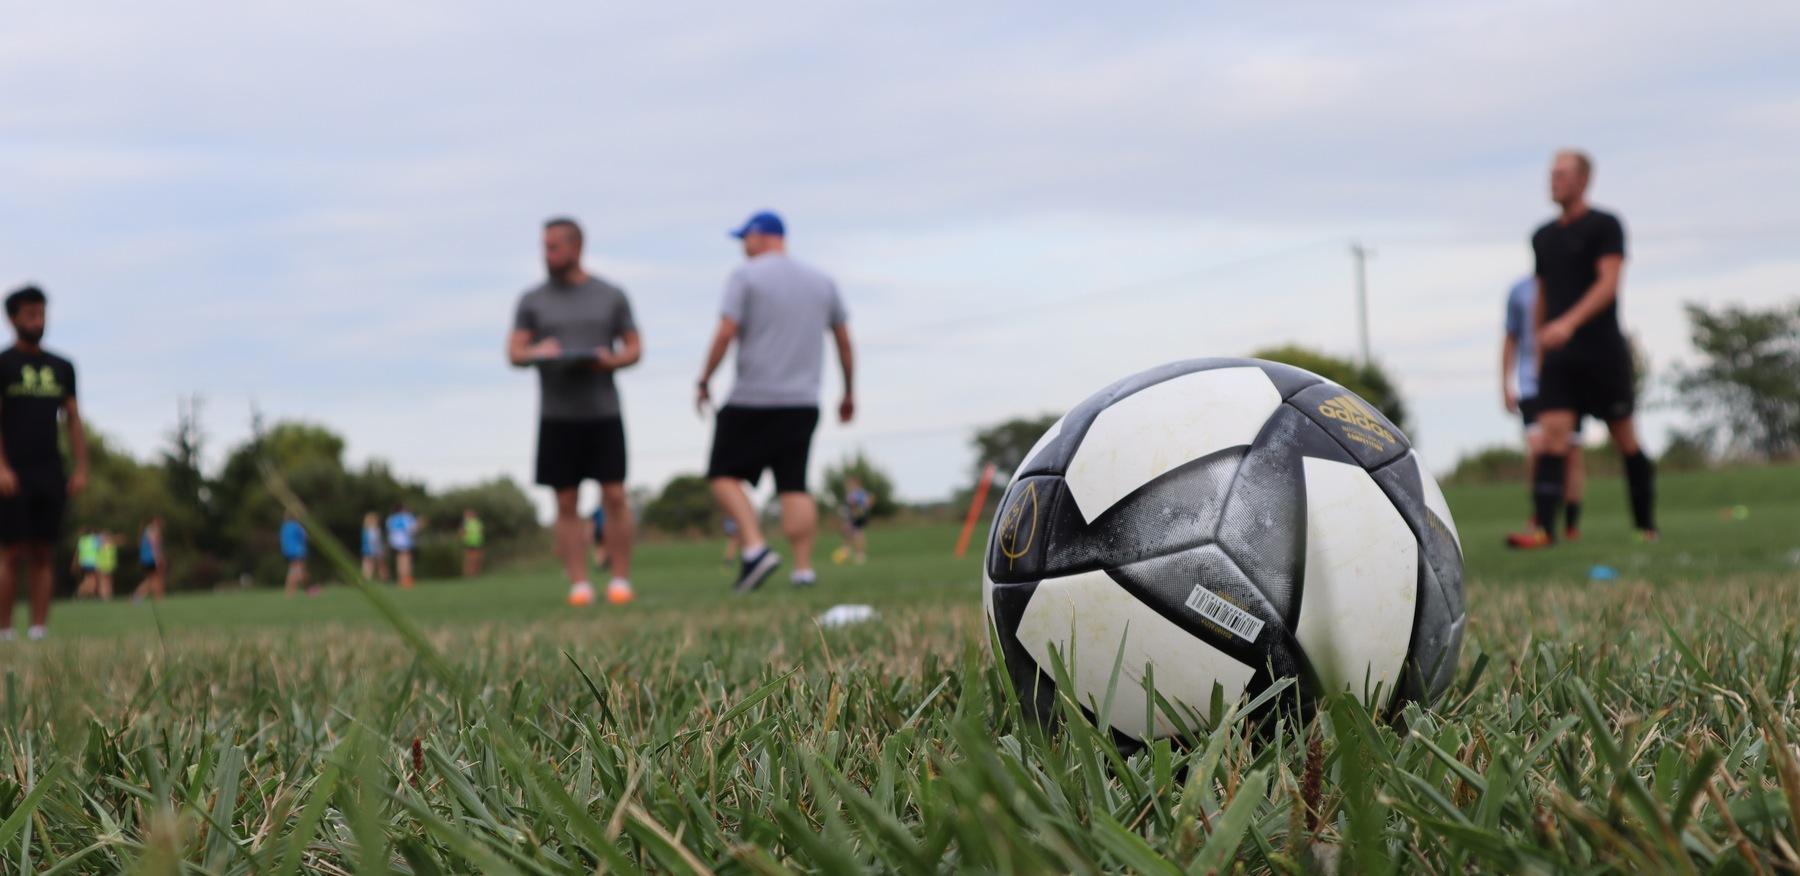 PREVIEW: Men's Soccer Takes on Conestoga to Open 2019 Season